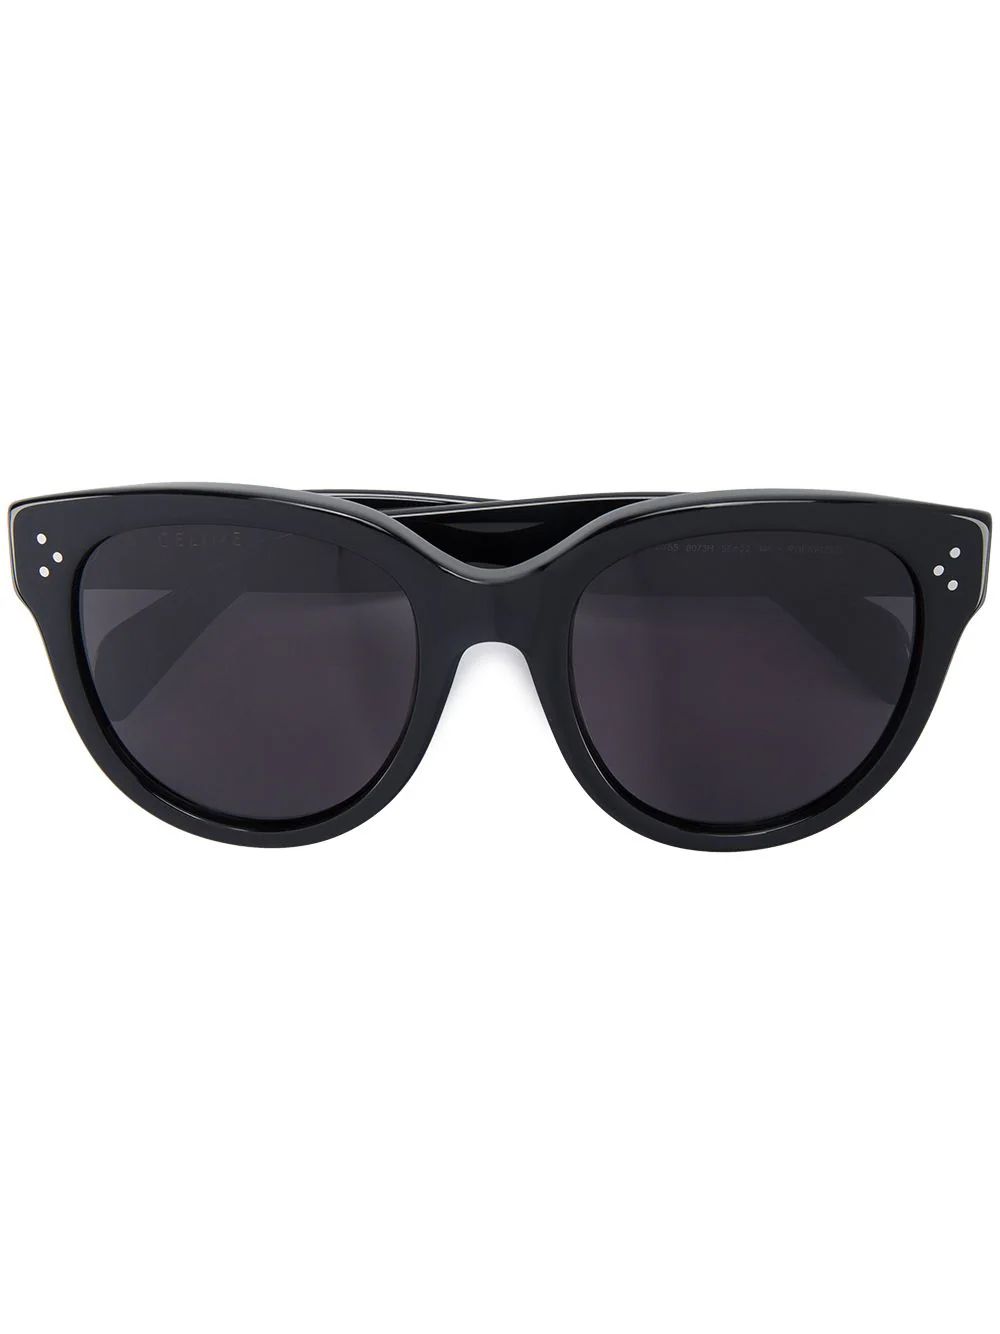 Celine Eyewear black Baby Audrey sunglasses | FarFetch Global